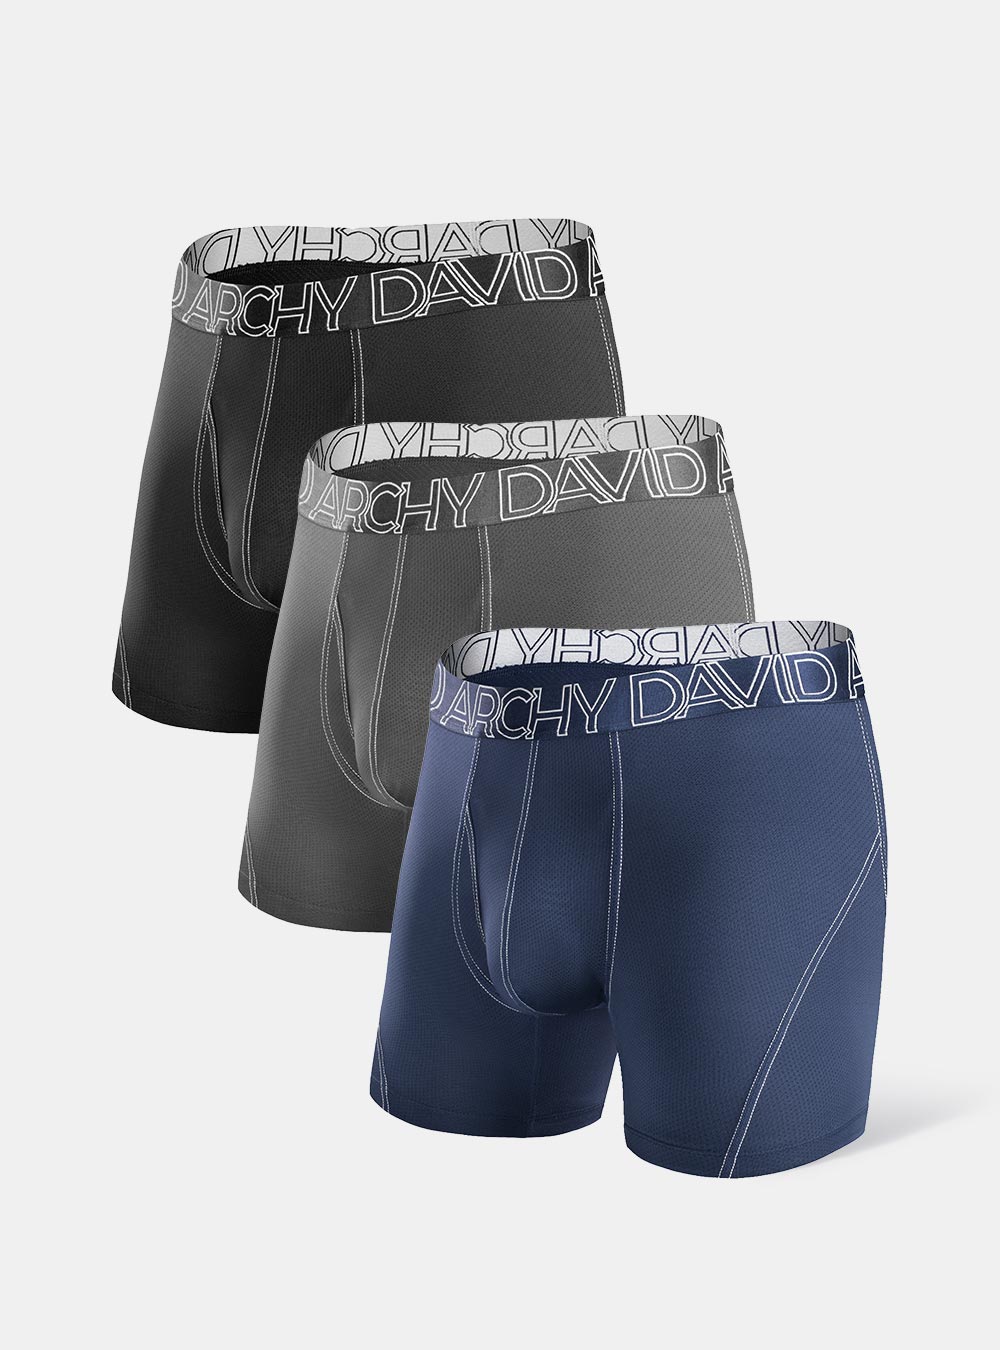  DAVID ARCHY Mens Underwear Solid Quick Dry Boxer Briefs  Active Performance Sports Odor Control Athletic Pouch Underwear